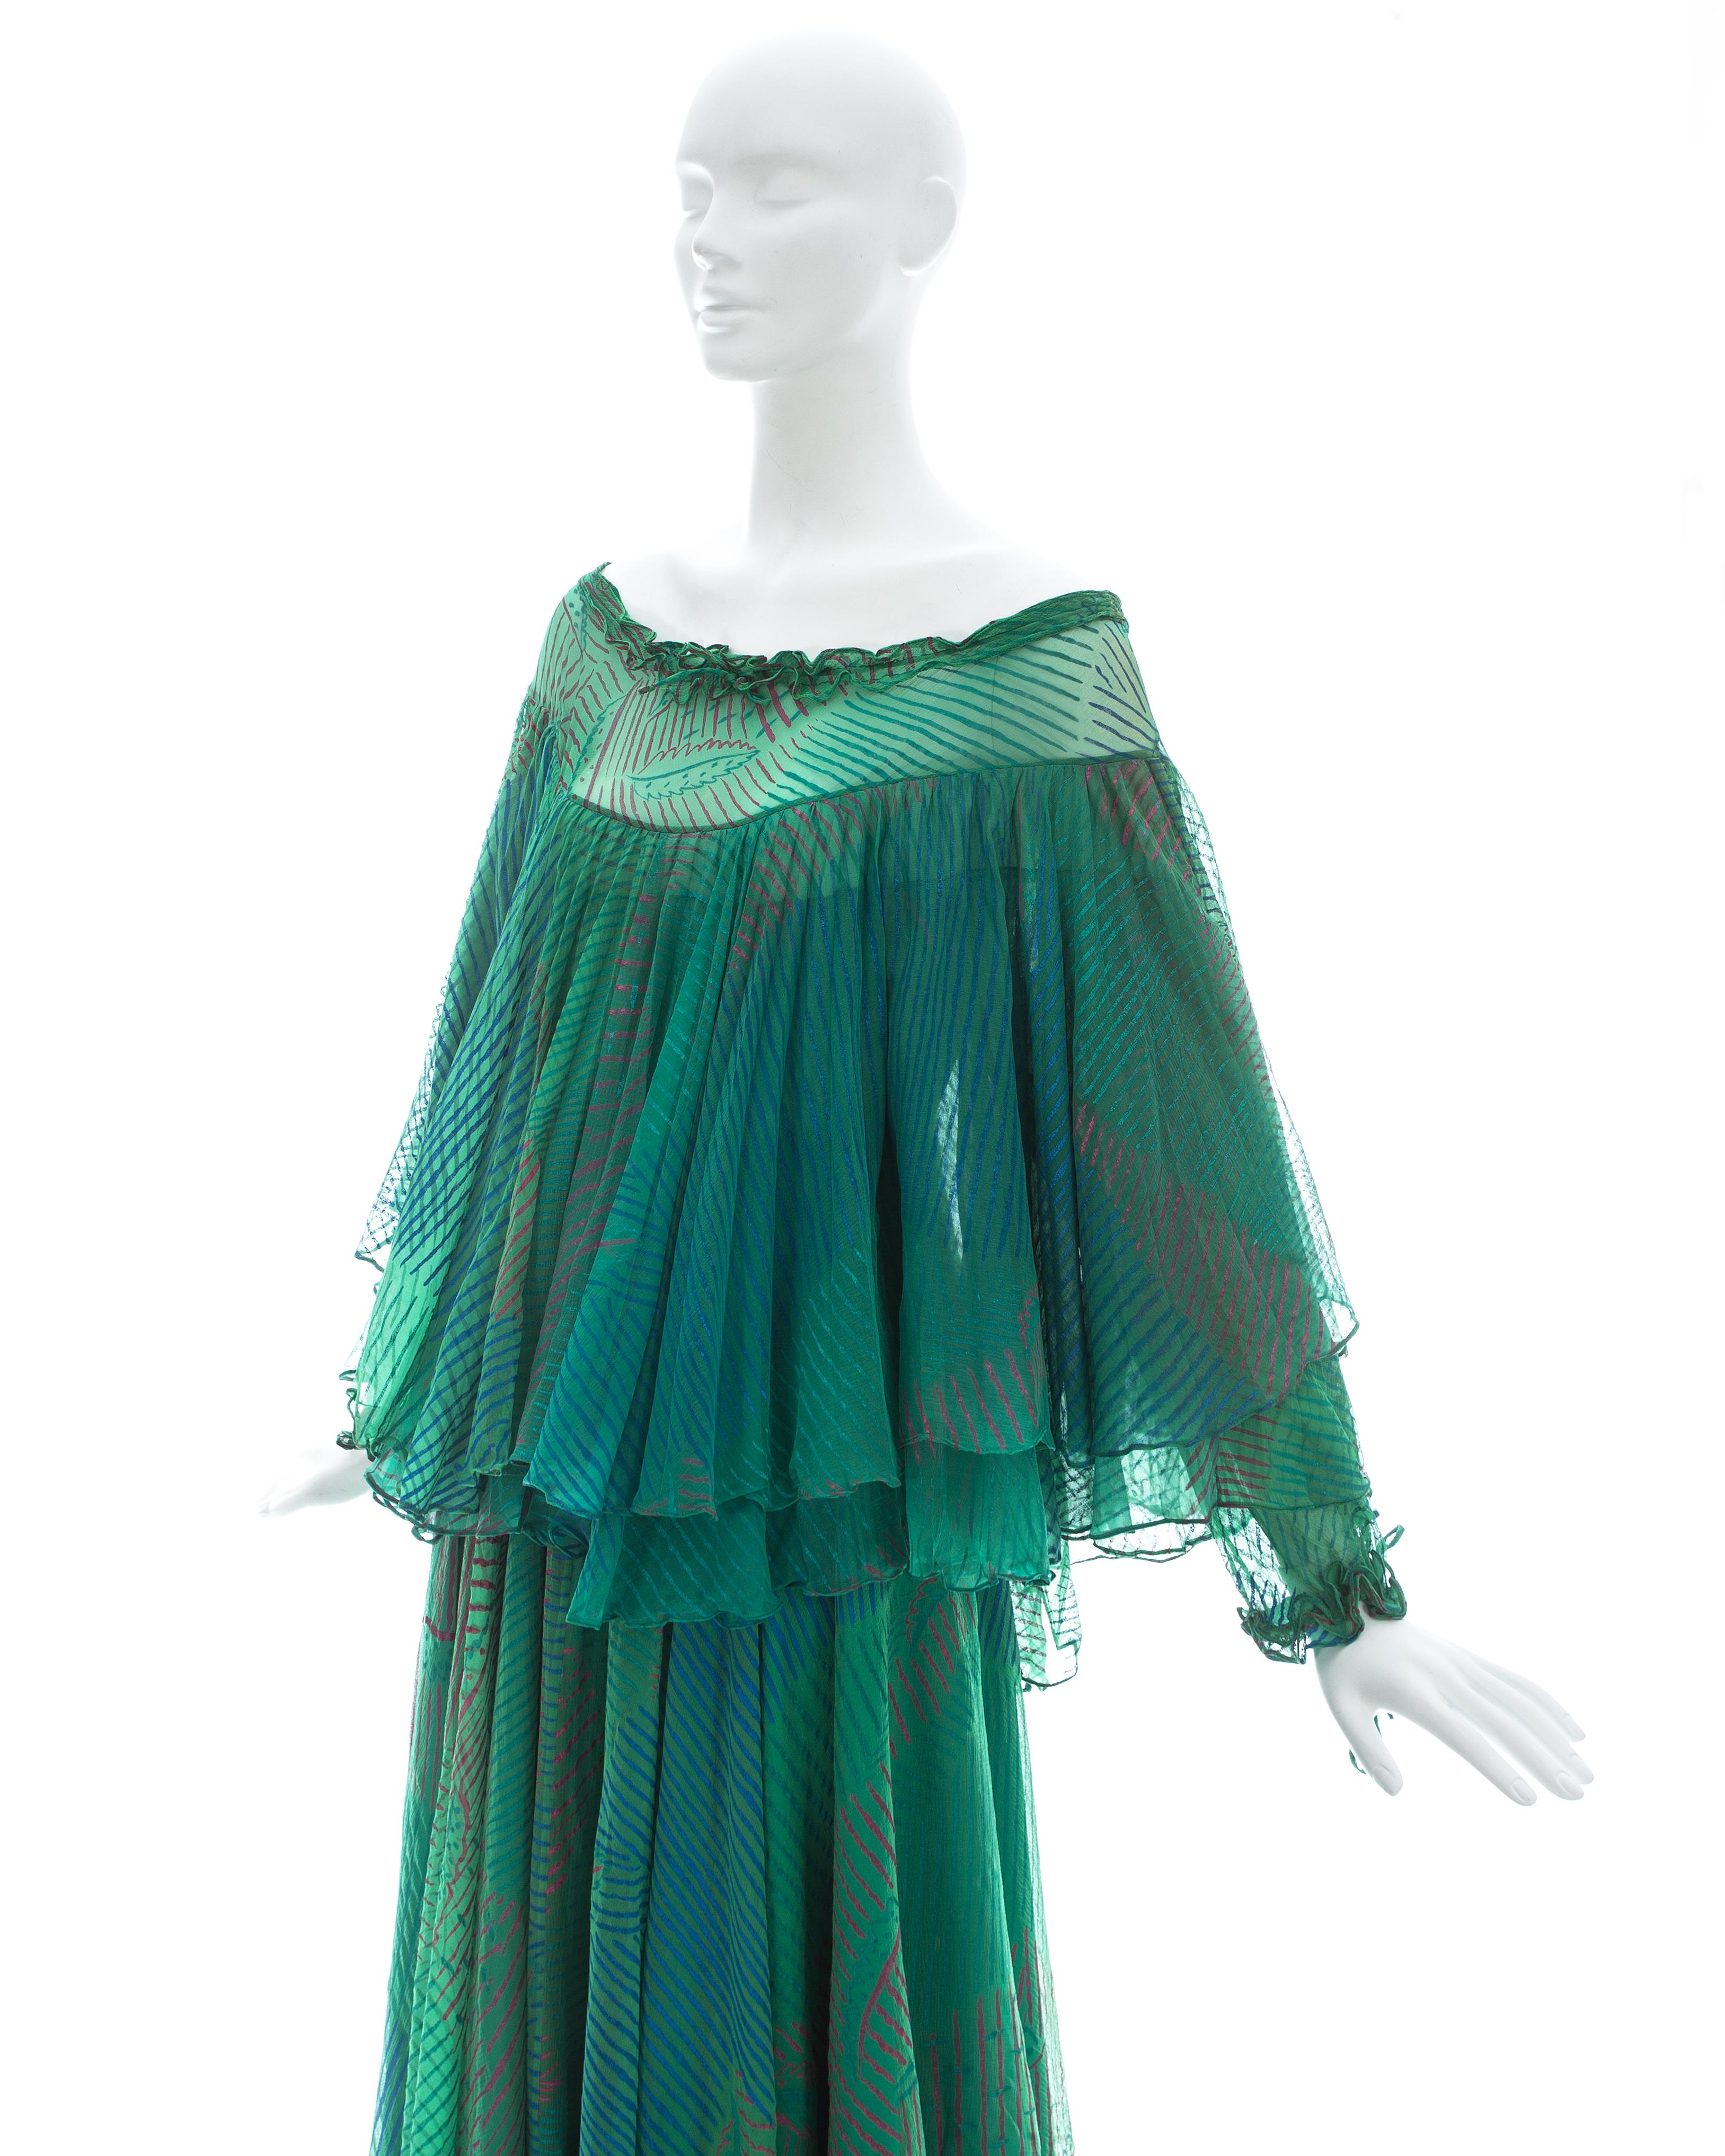 Women's Ossie Clark green silk screen printed off the shoulder dress, ca. 1976